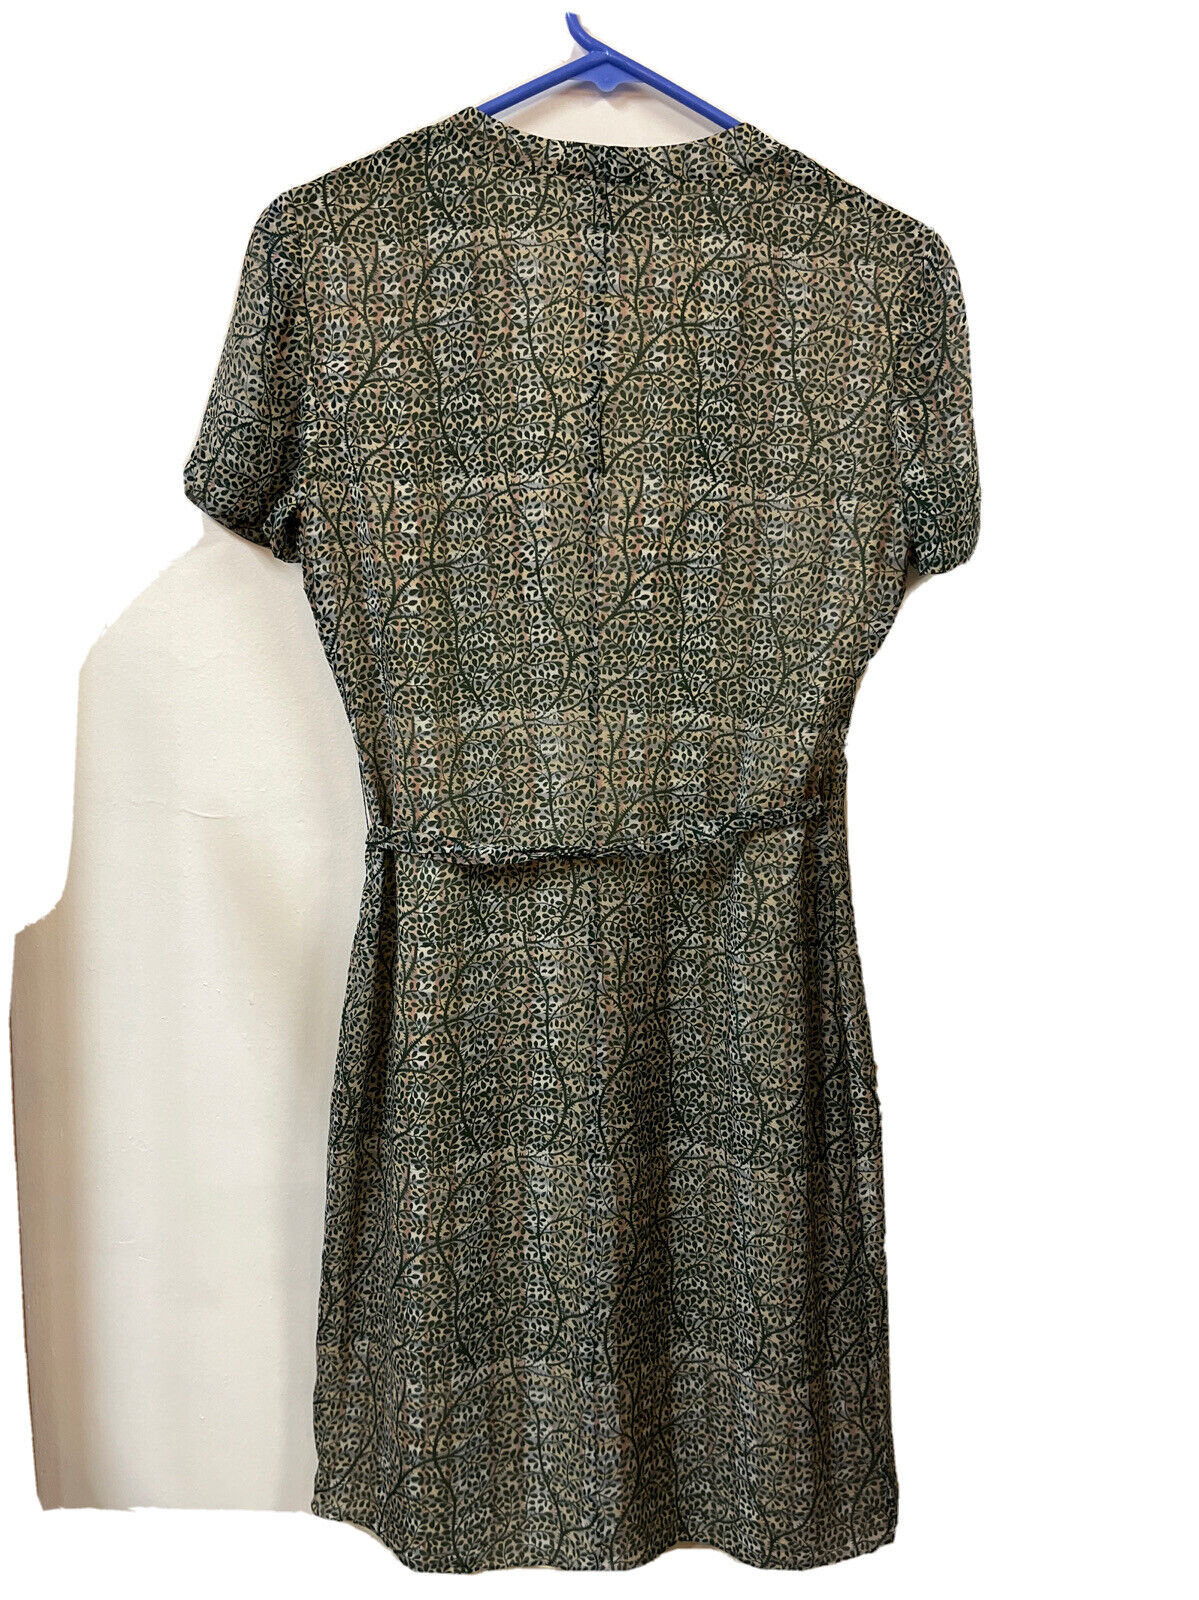 Kay Unger 100% Silk Wrap Dress Short Sleeve Size 4 - image 3